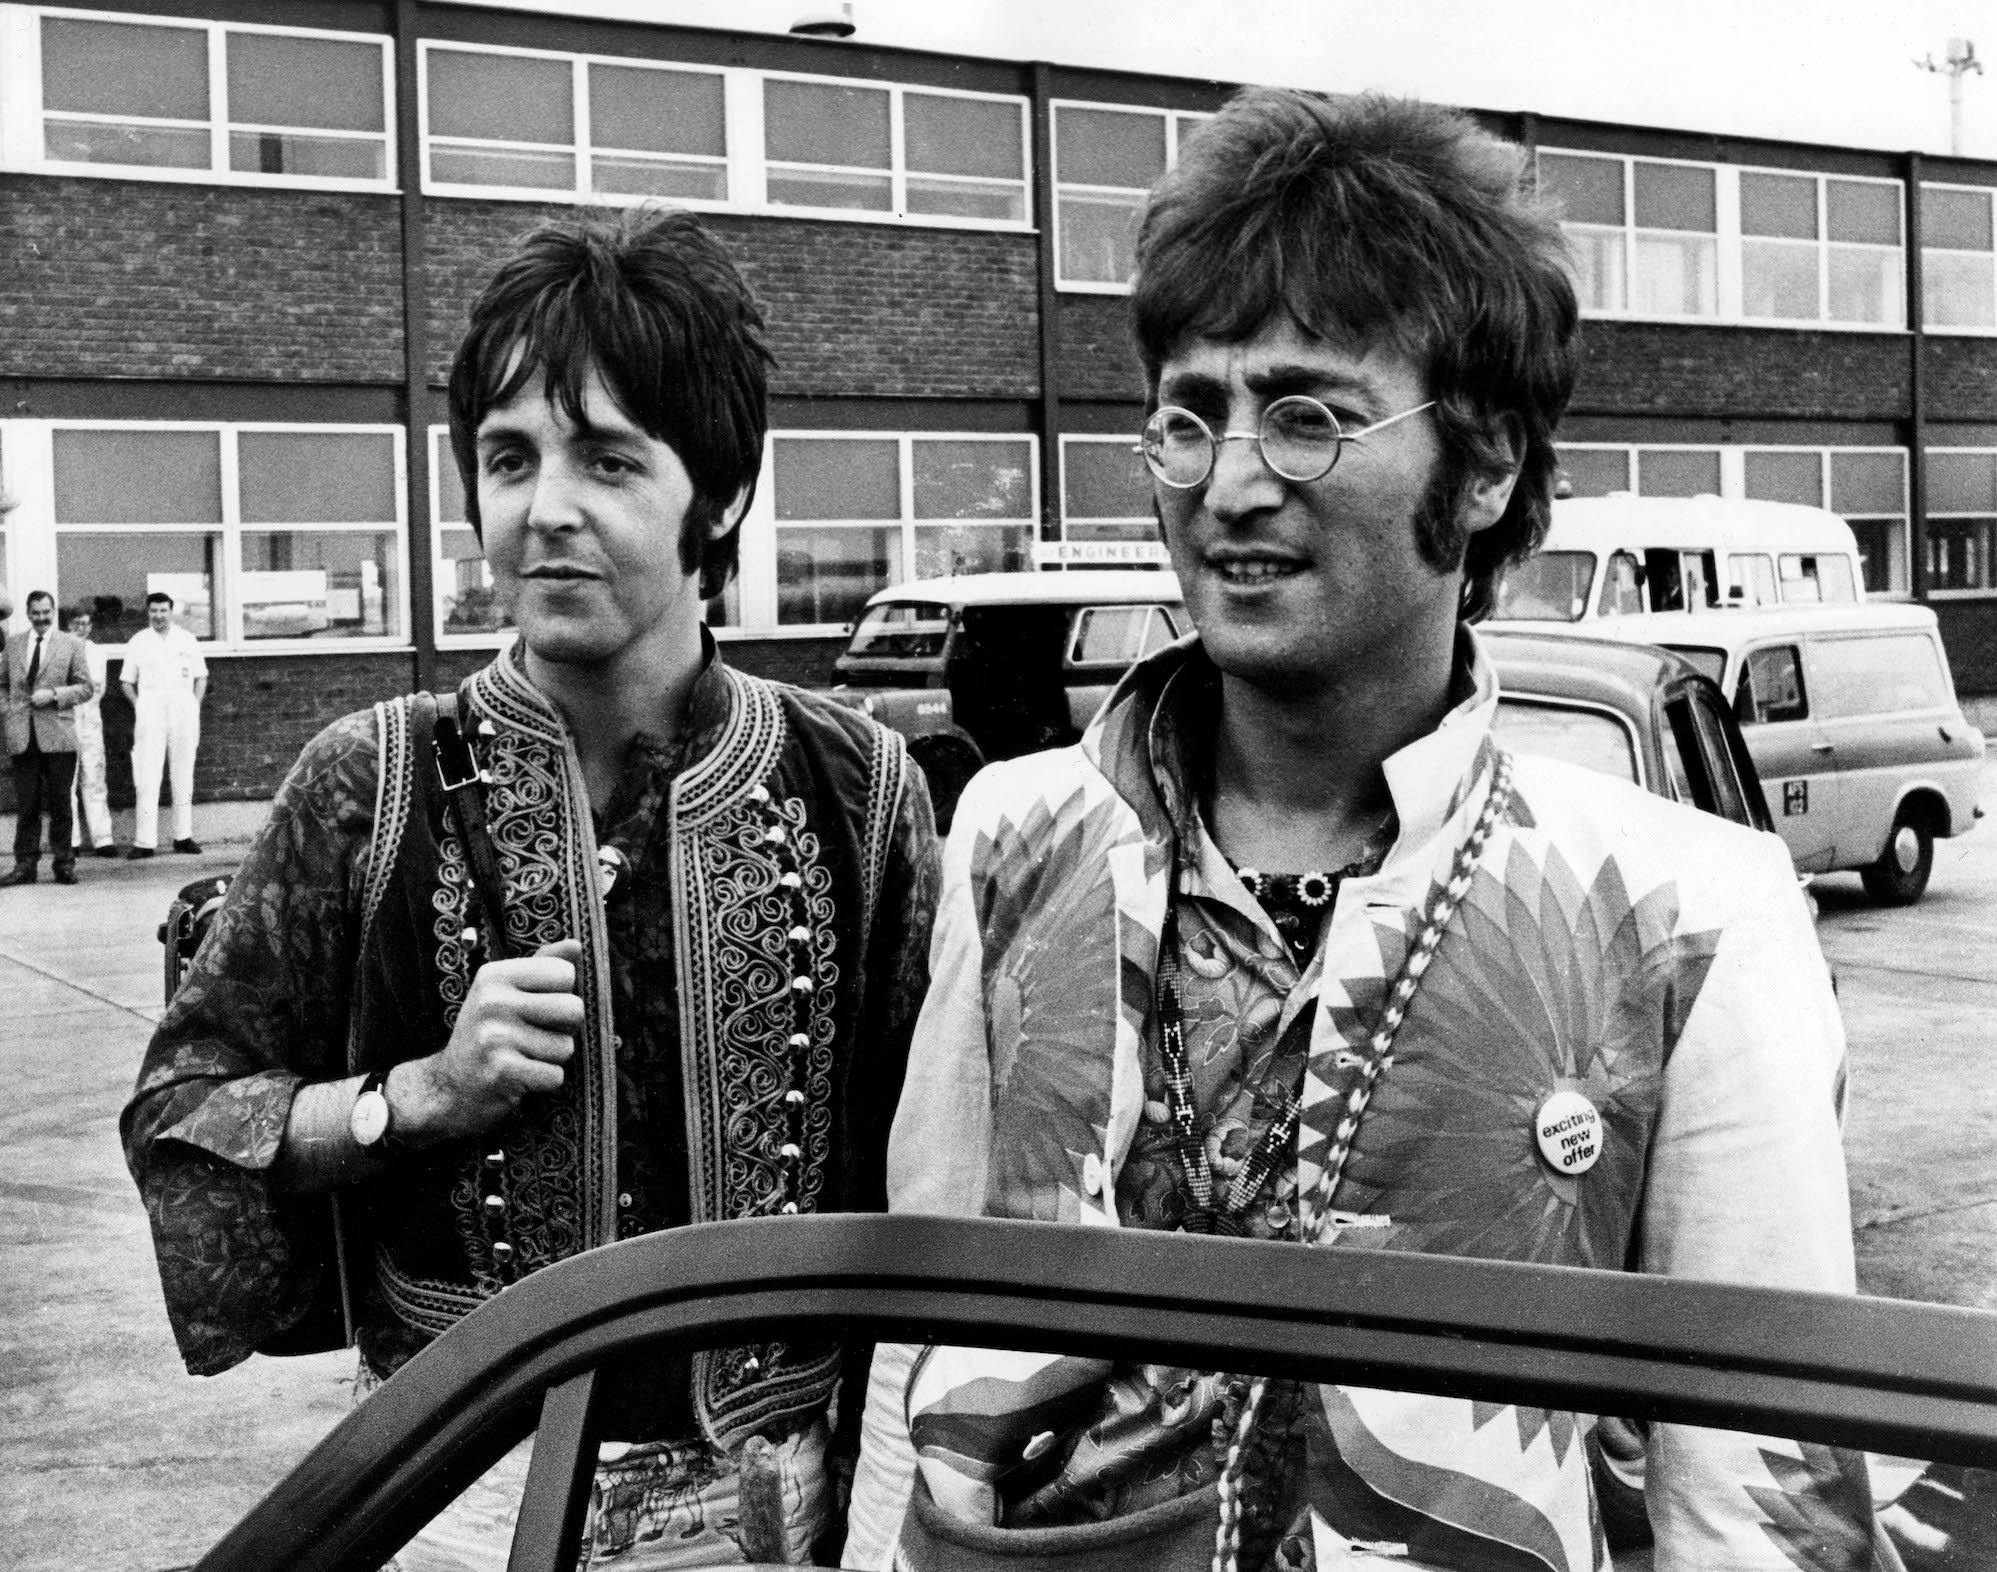 Paul McCartney and John Lennon of The Beatles at Heathrow Airport in London